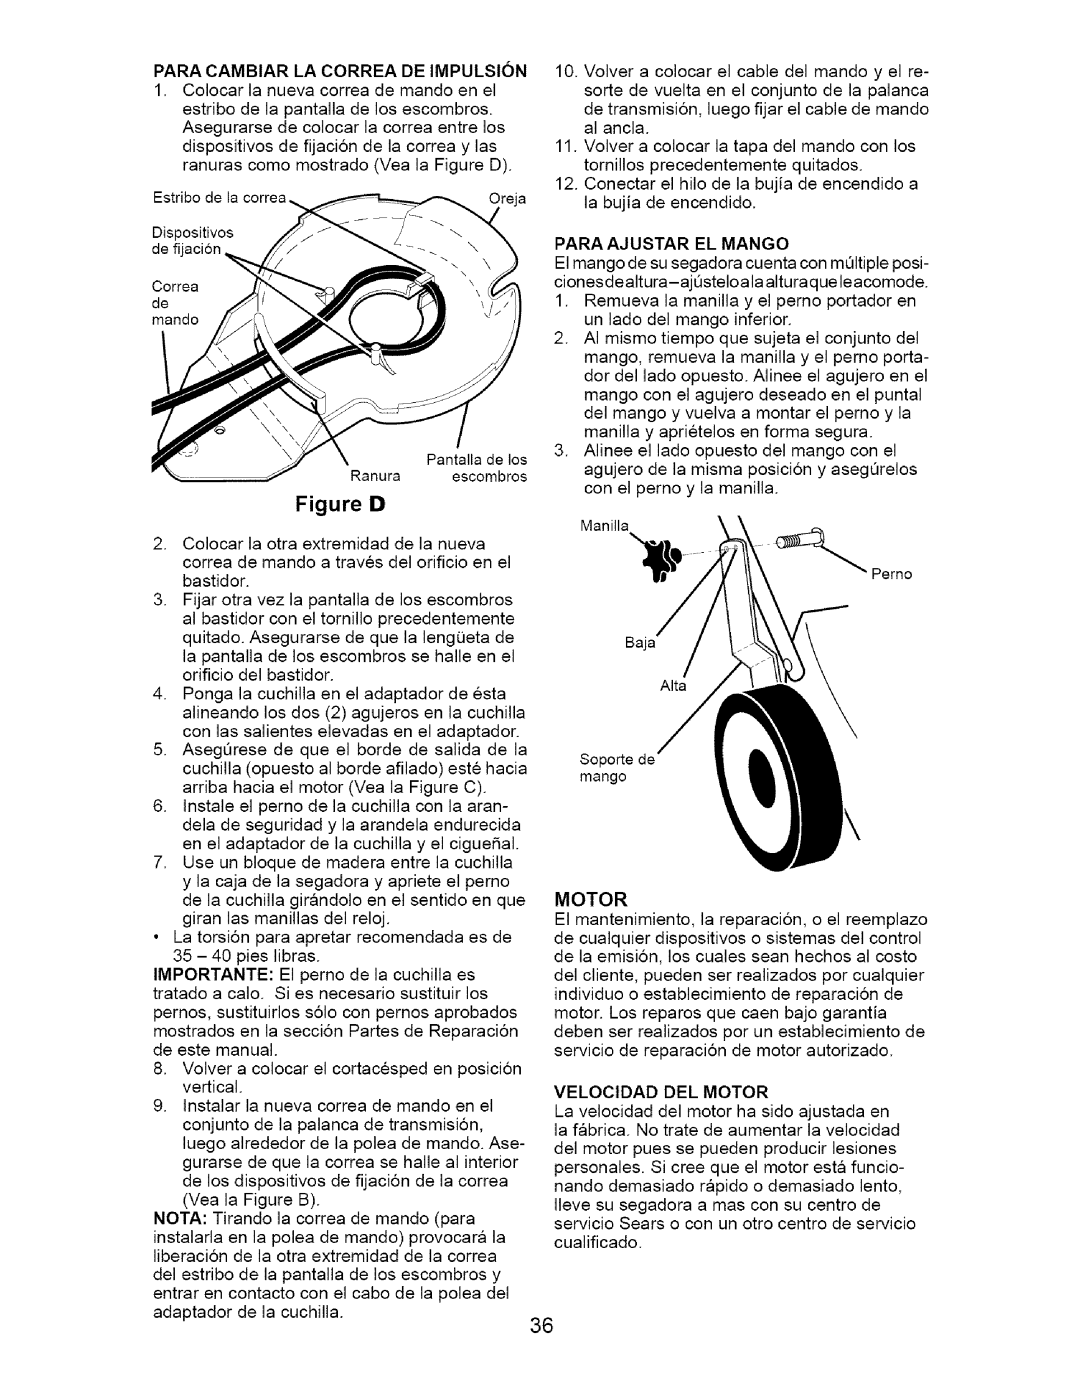 Craftsman 917.37181 owner manual Figure D, Para Ajustar El Mango, Motor 